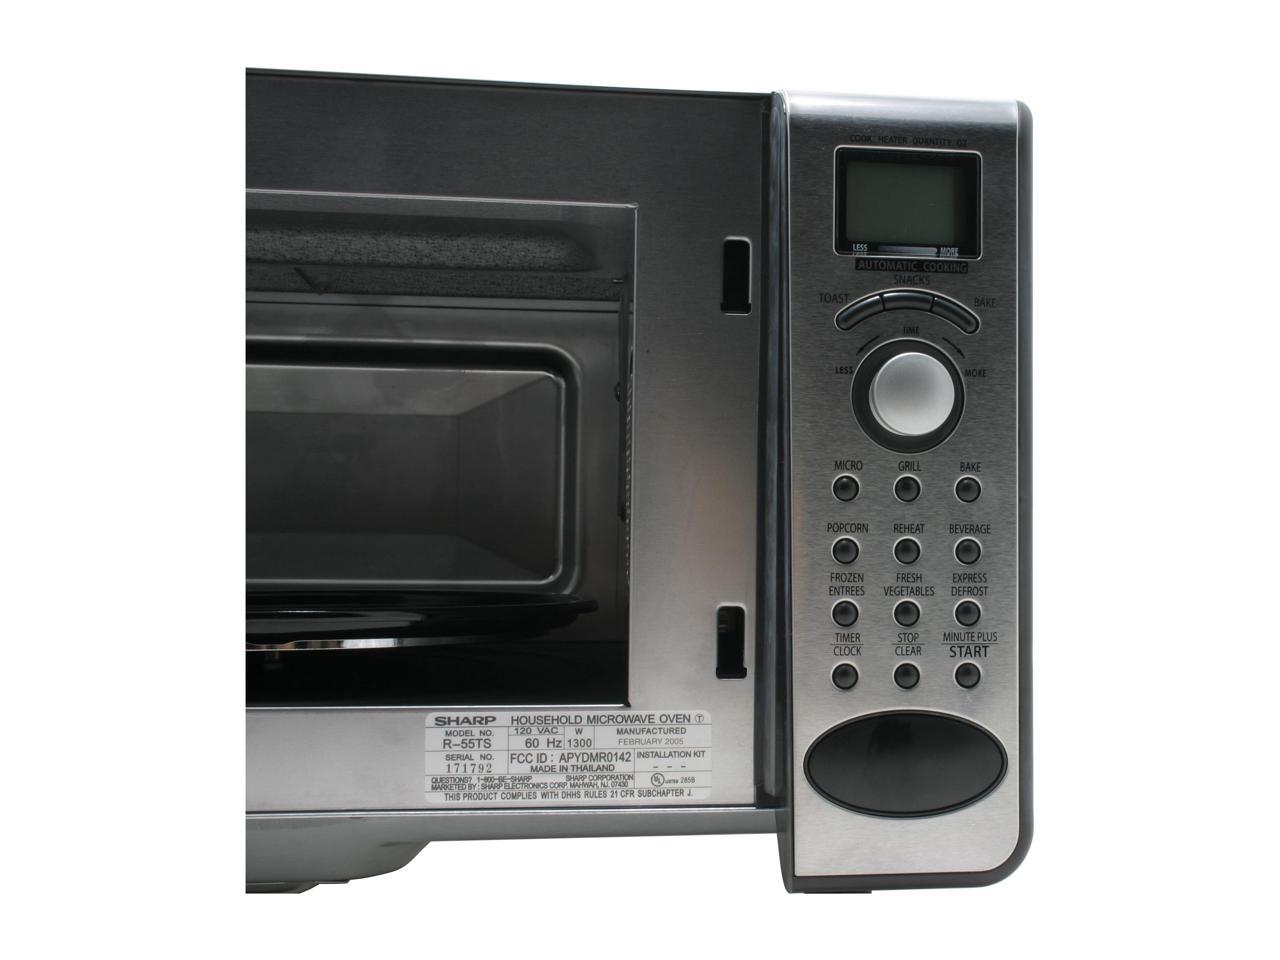 Sharp 0.5 cu.ft. Microwave Oven R-55TS - Newegg.com